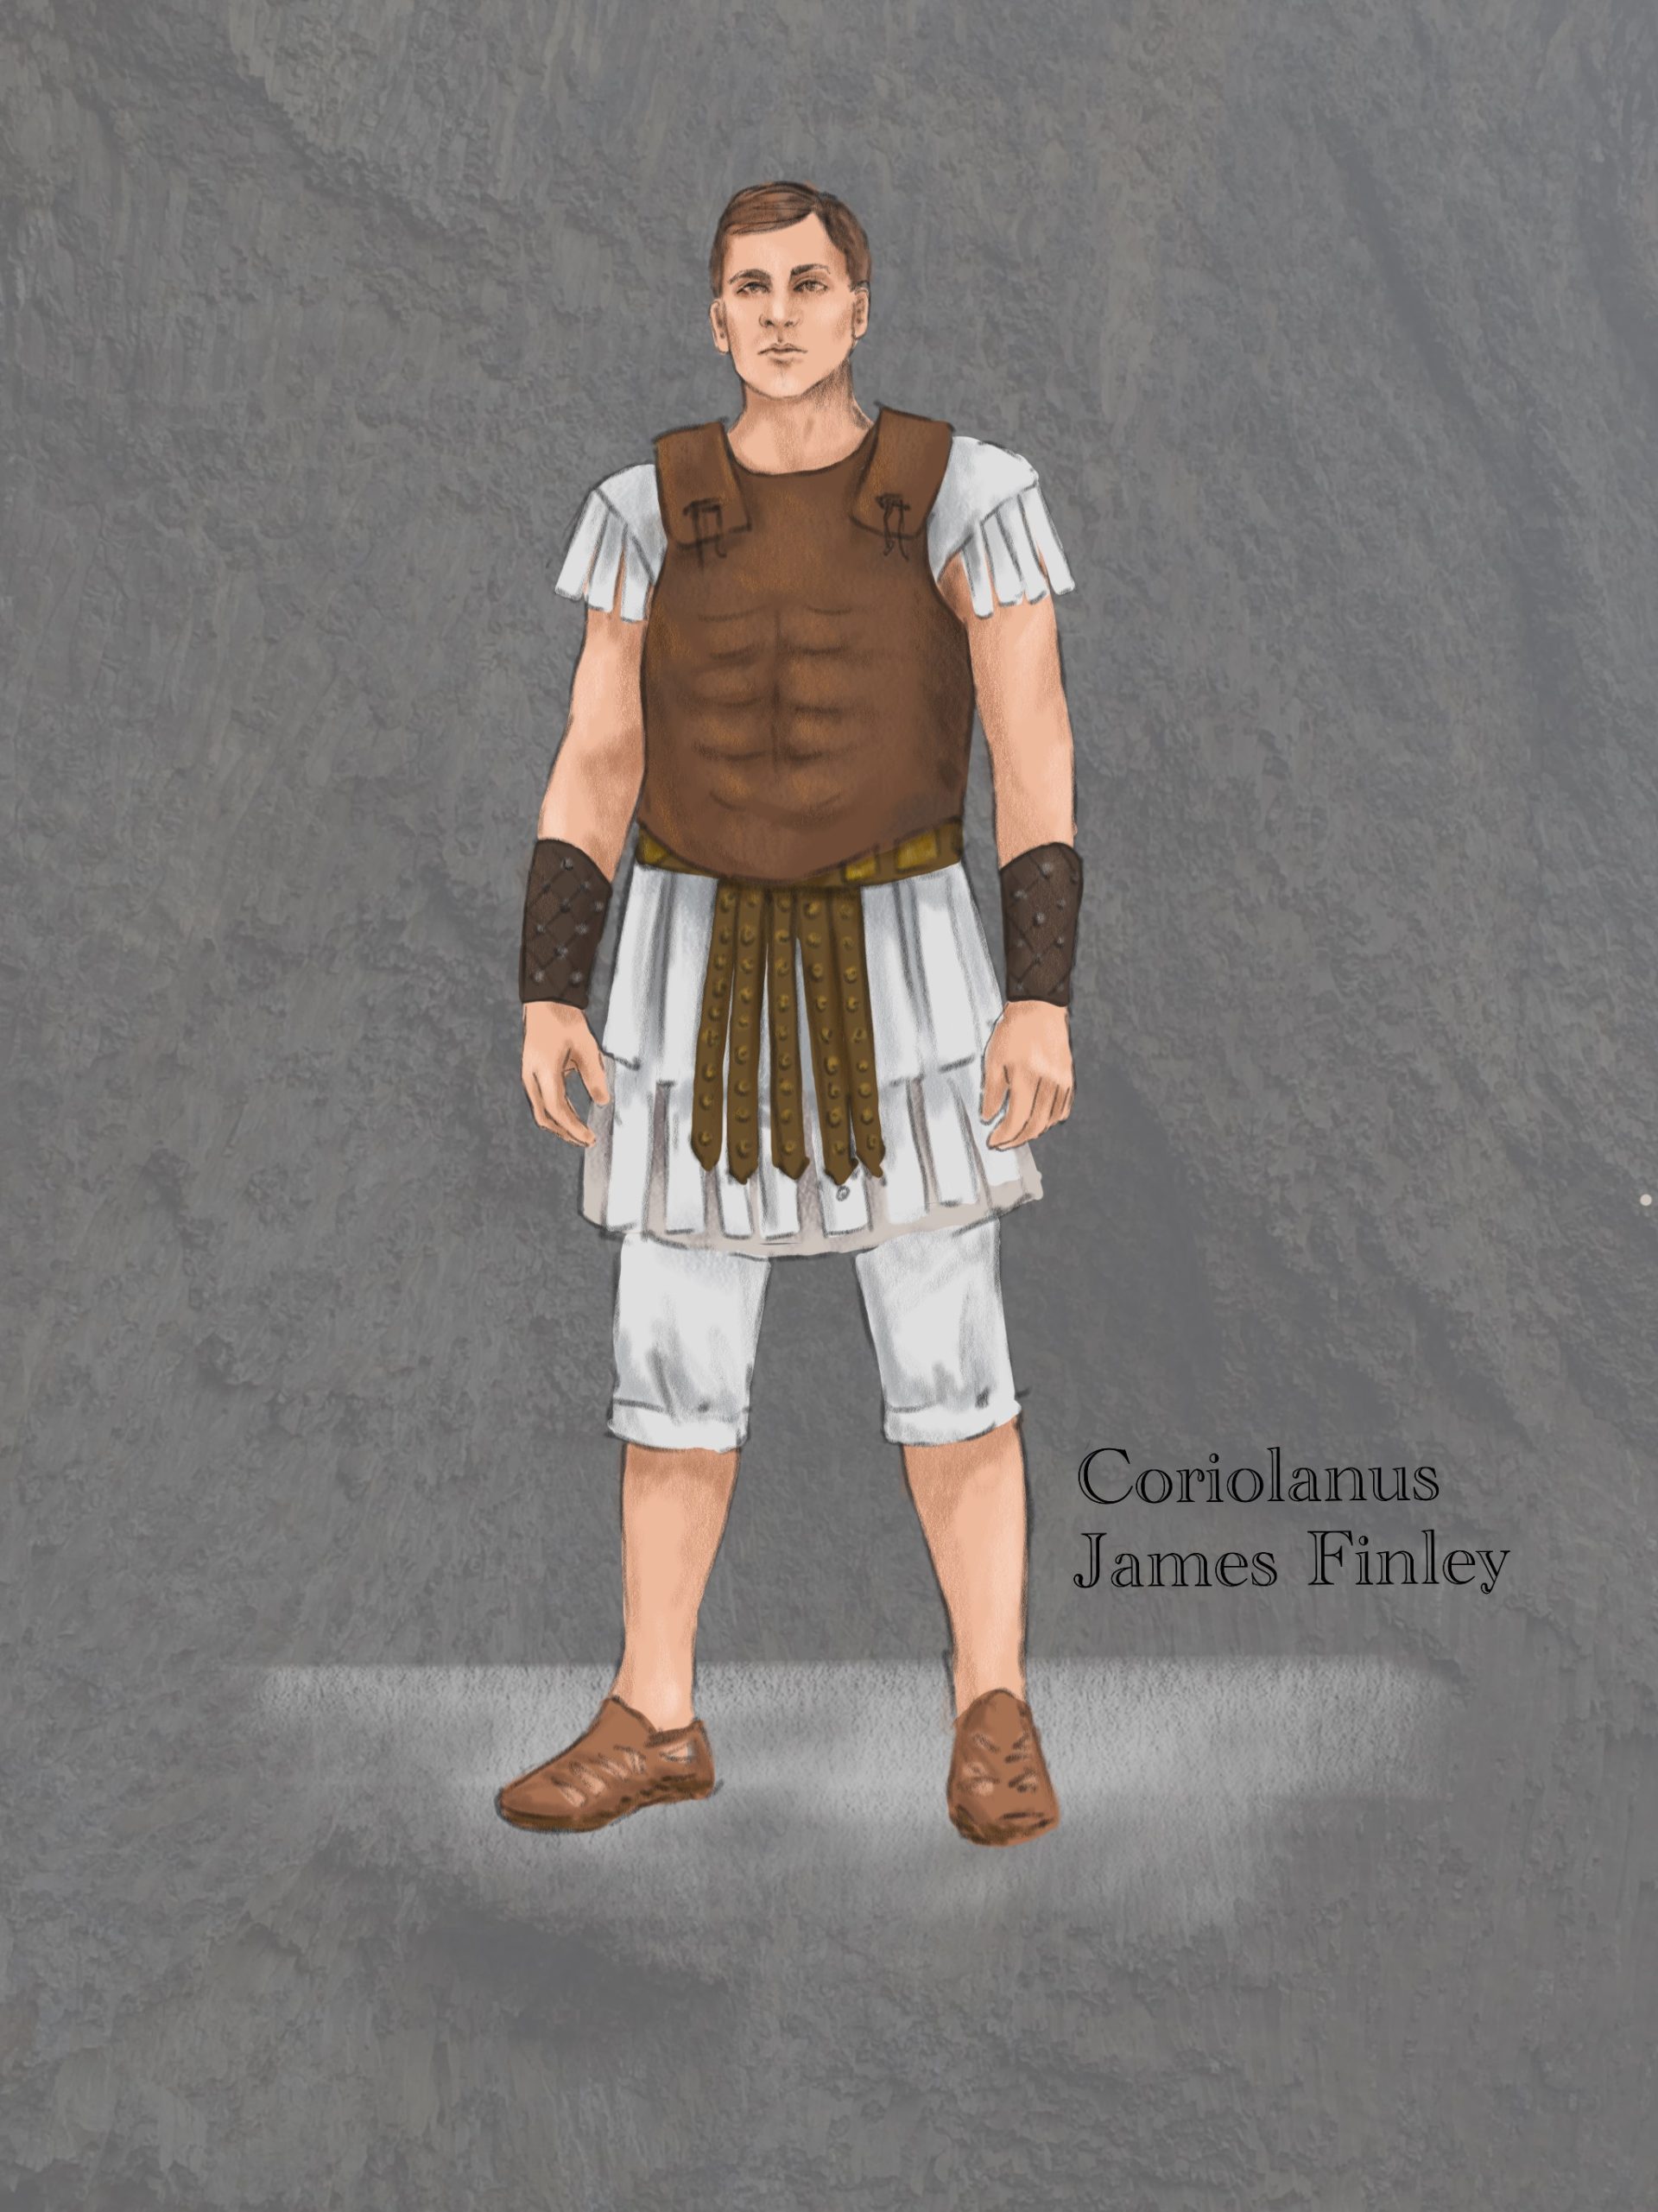 Costume design for James Finley as Coriolanus